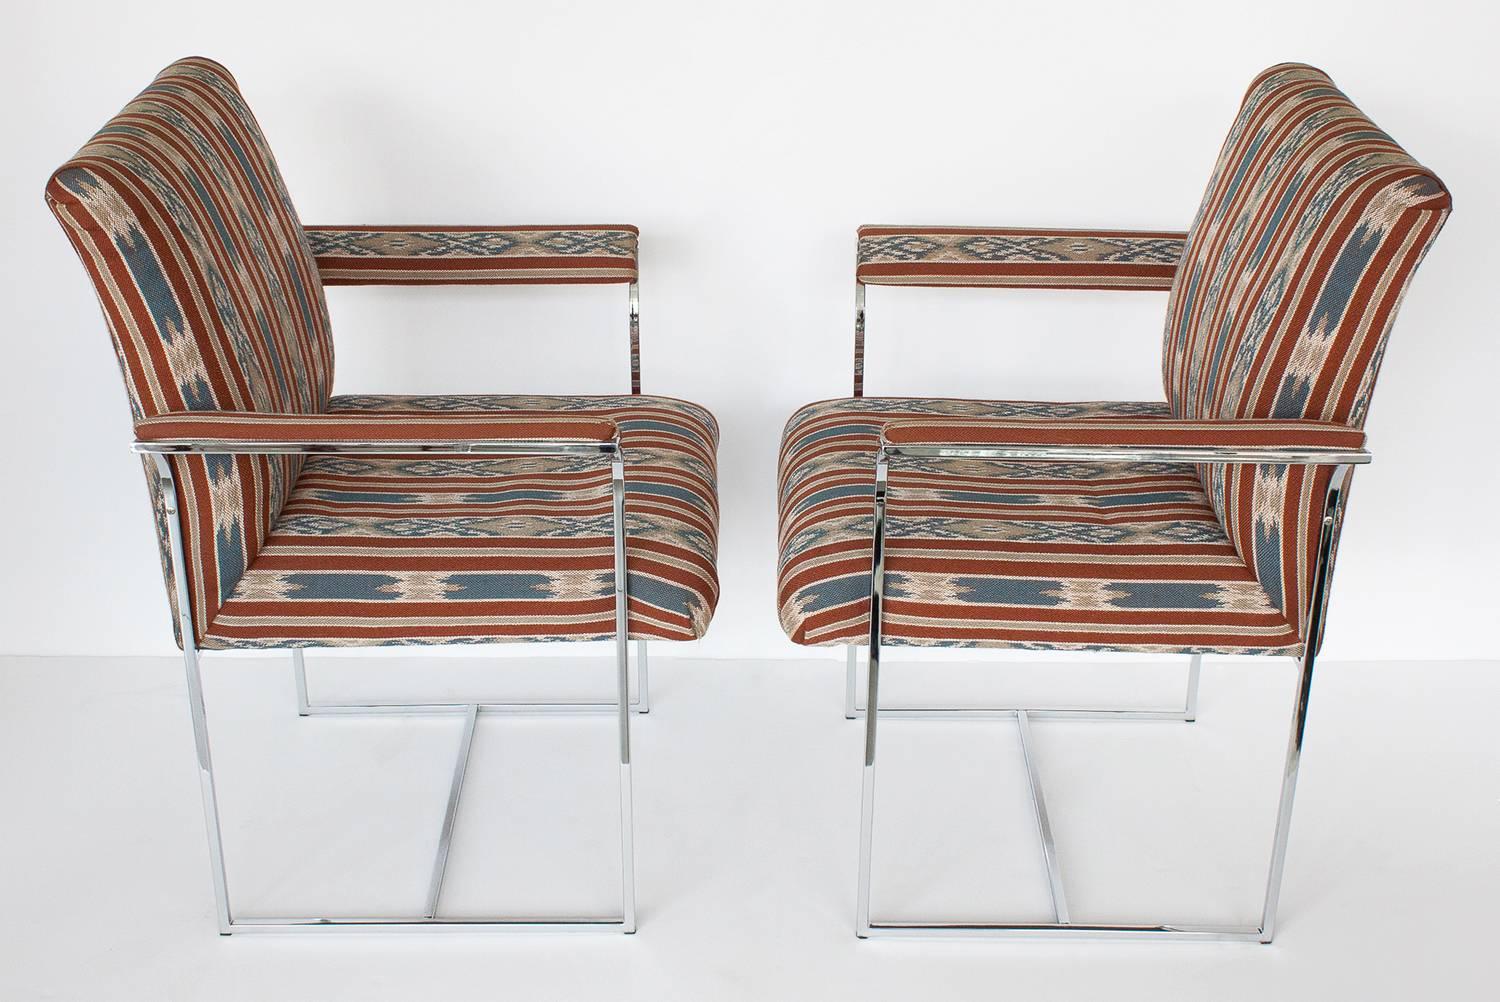 Pair of Milo Baughman chrome frame armchairs. Architectural chrome-plated 0.5